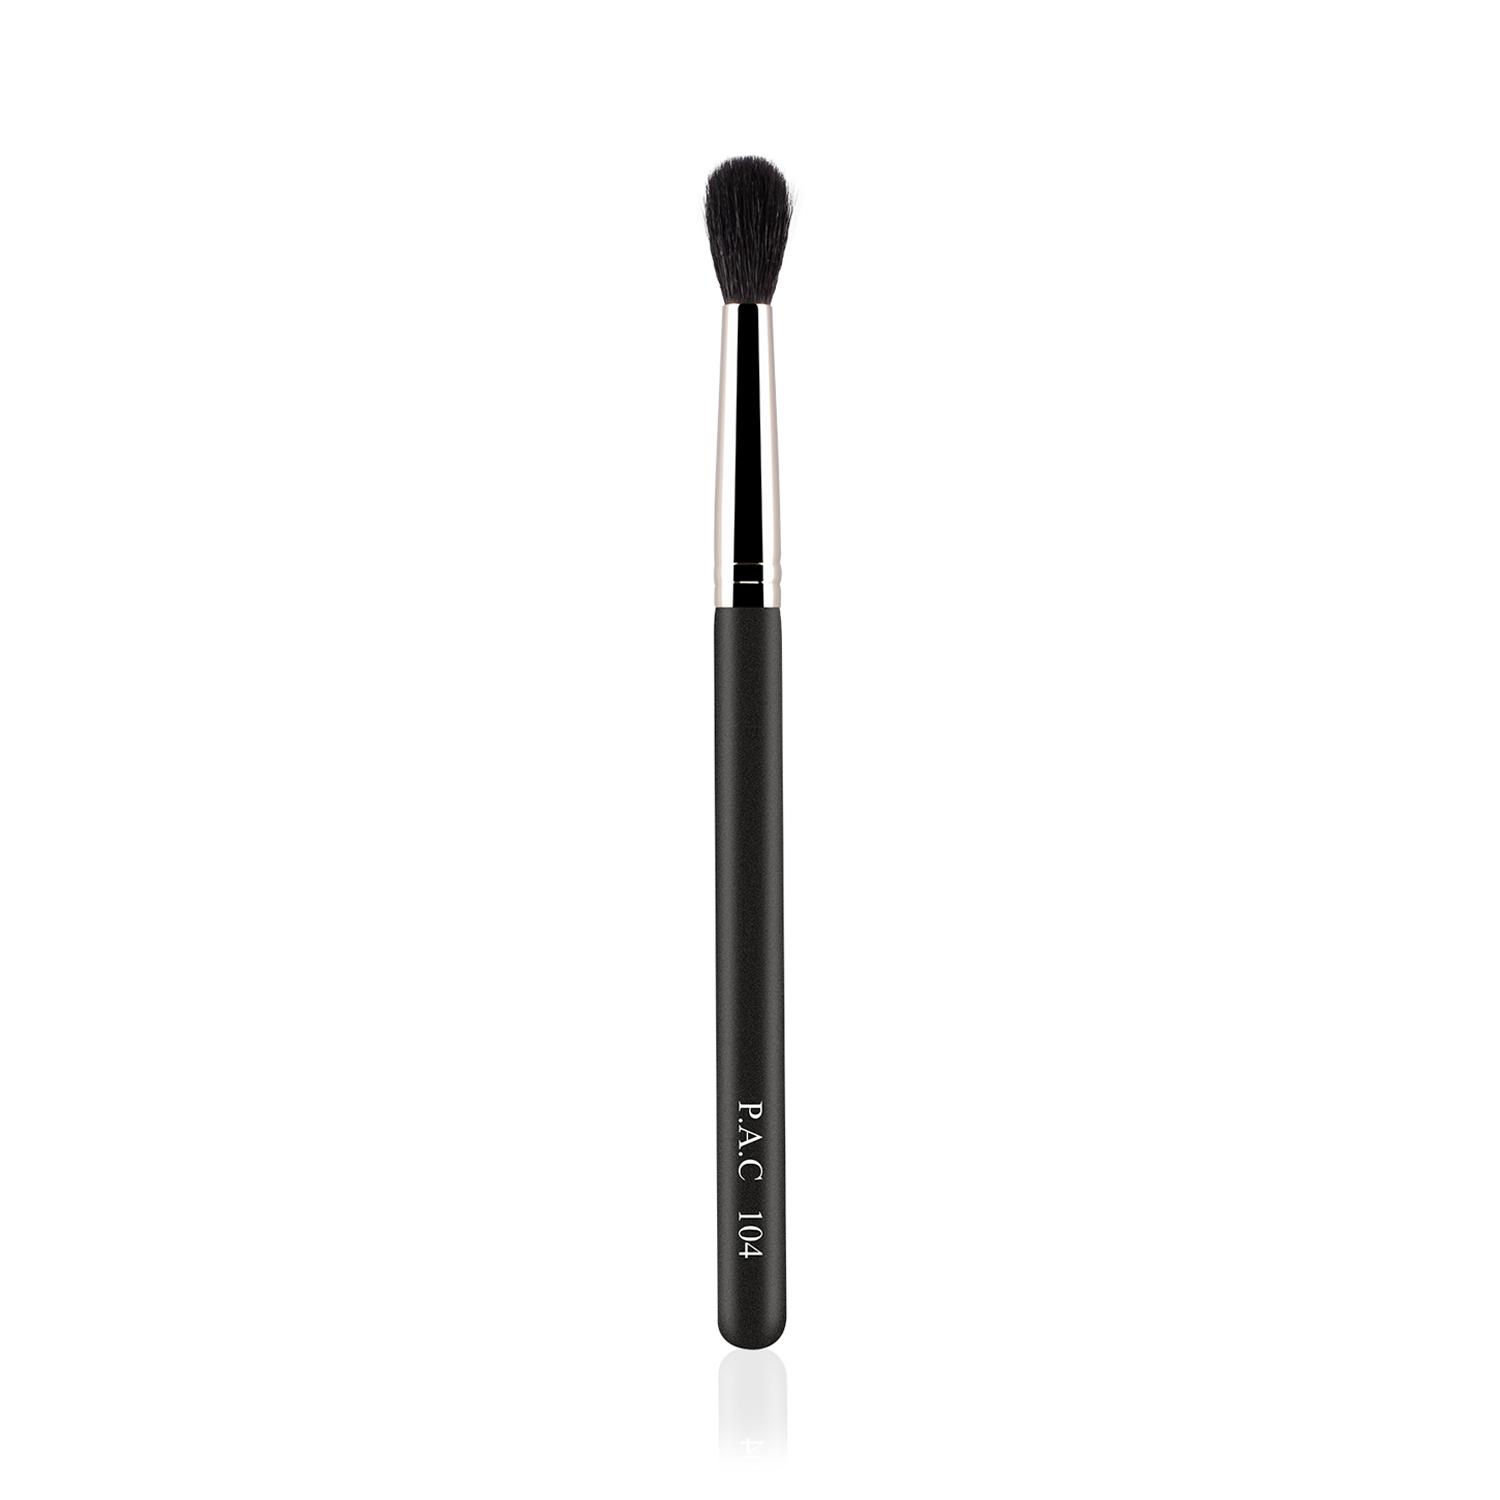 PAC | PAC Eyeshadow Blending Brush - 104 (1Pc)